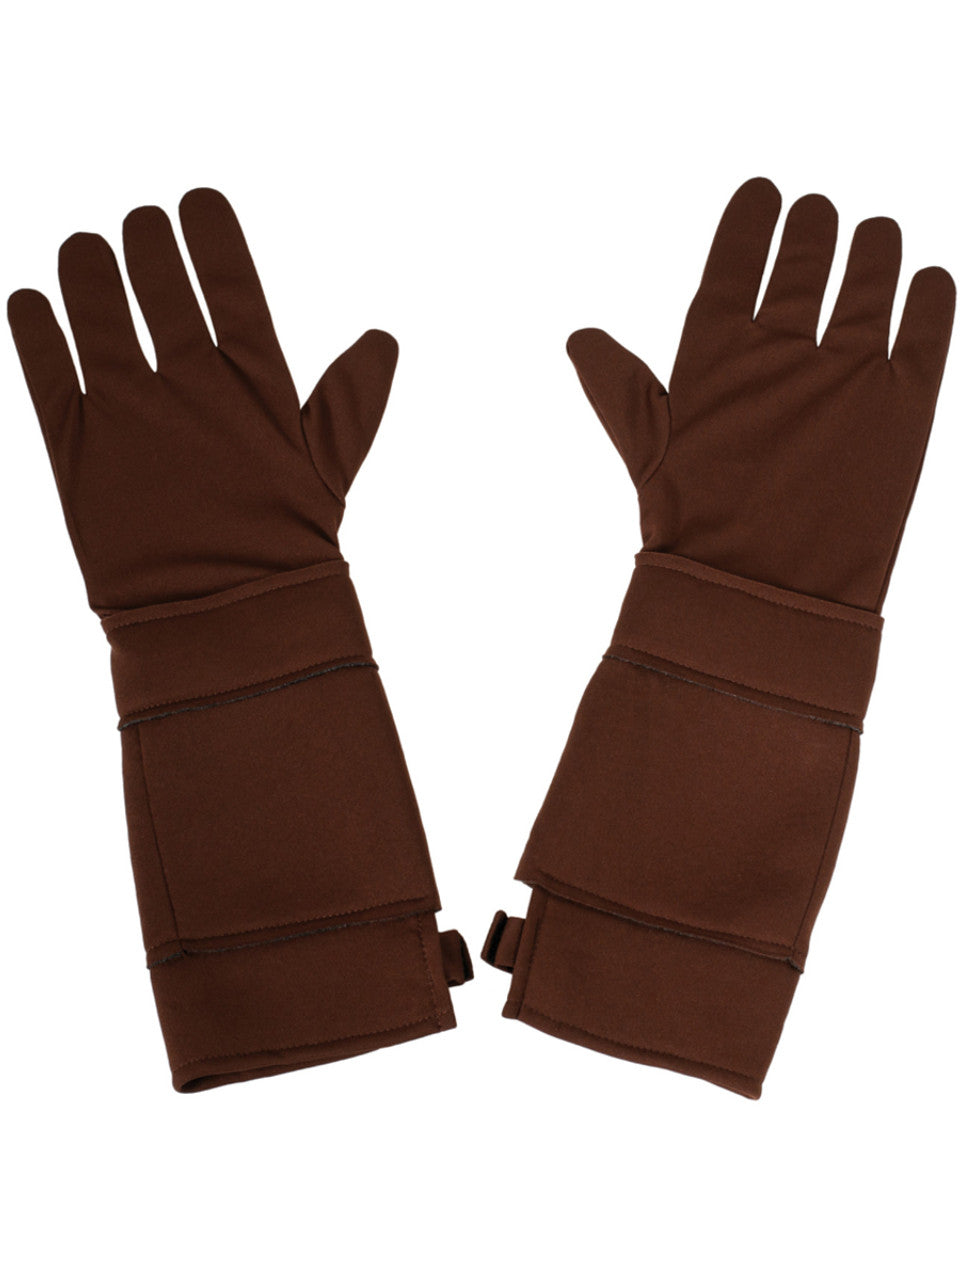 Gloves, Captain America Retro-brown : CHILD